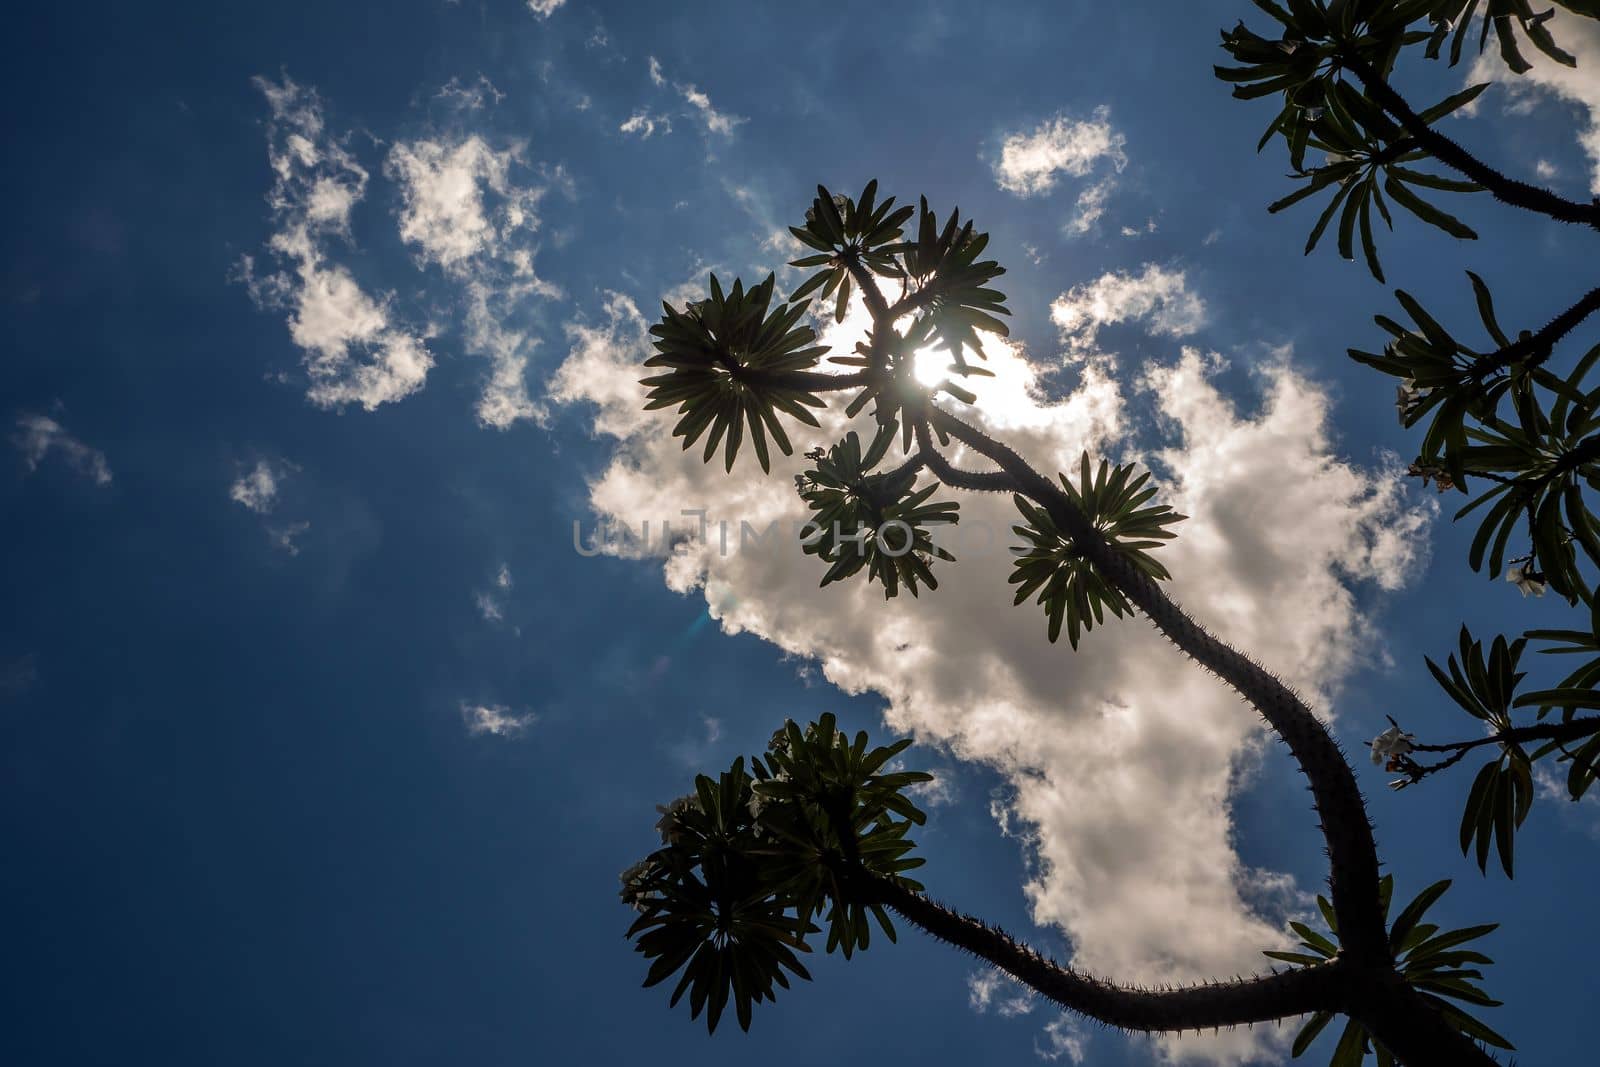 Madagascar palm the Spiky desert plant in the hard sunlight of daytime by Satakorn